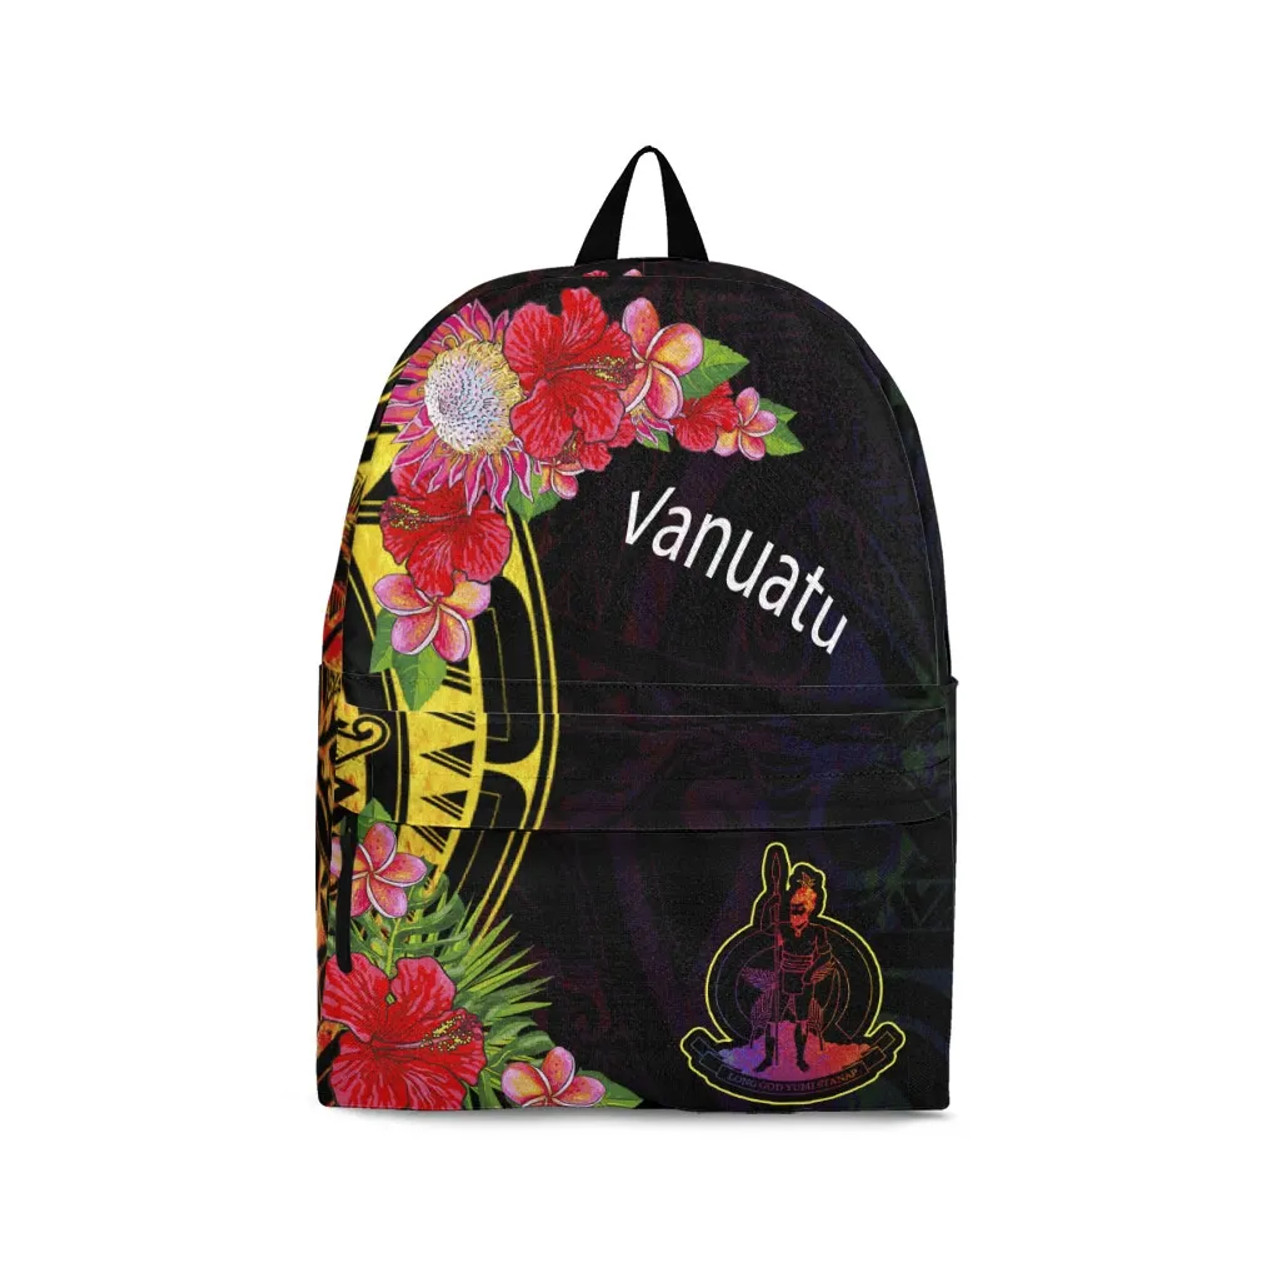 Vanuatu Backpack - Tropical Hippie Style 1